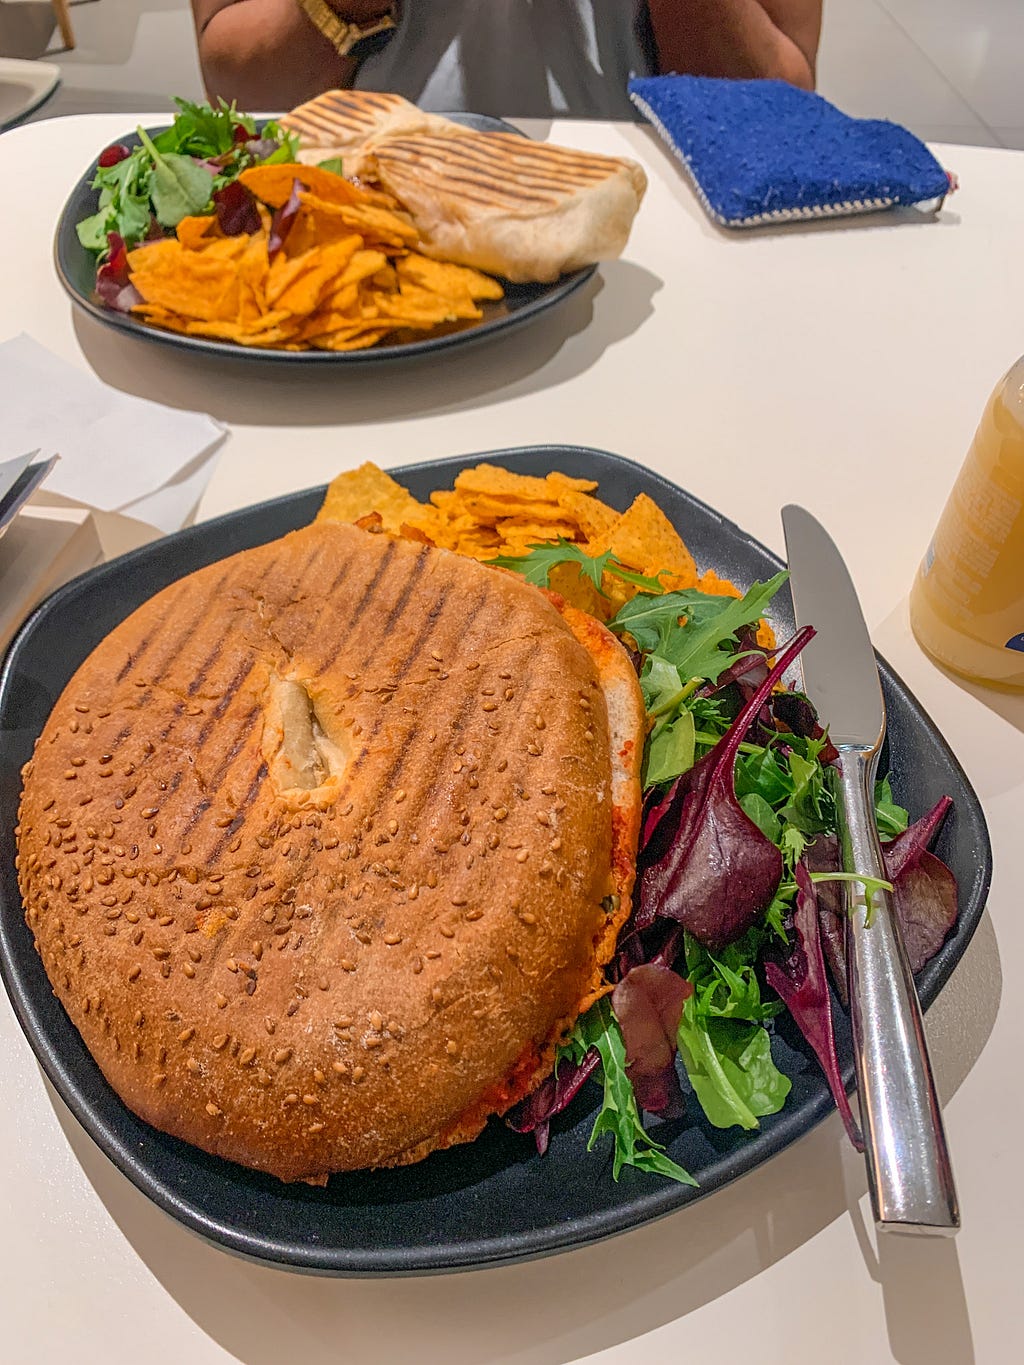 Tuna sandwich at Relish, Malta airport